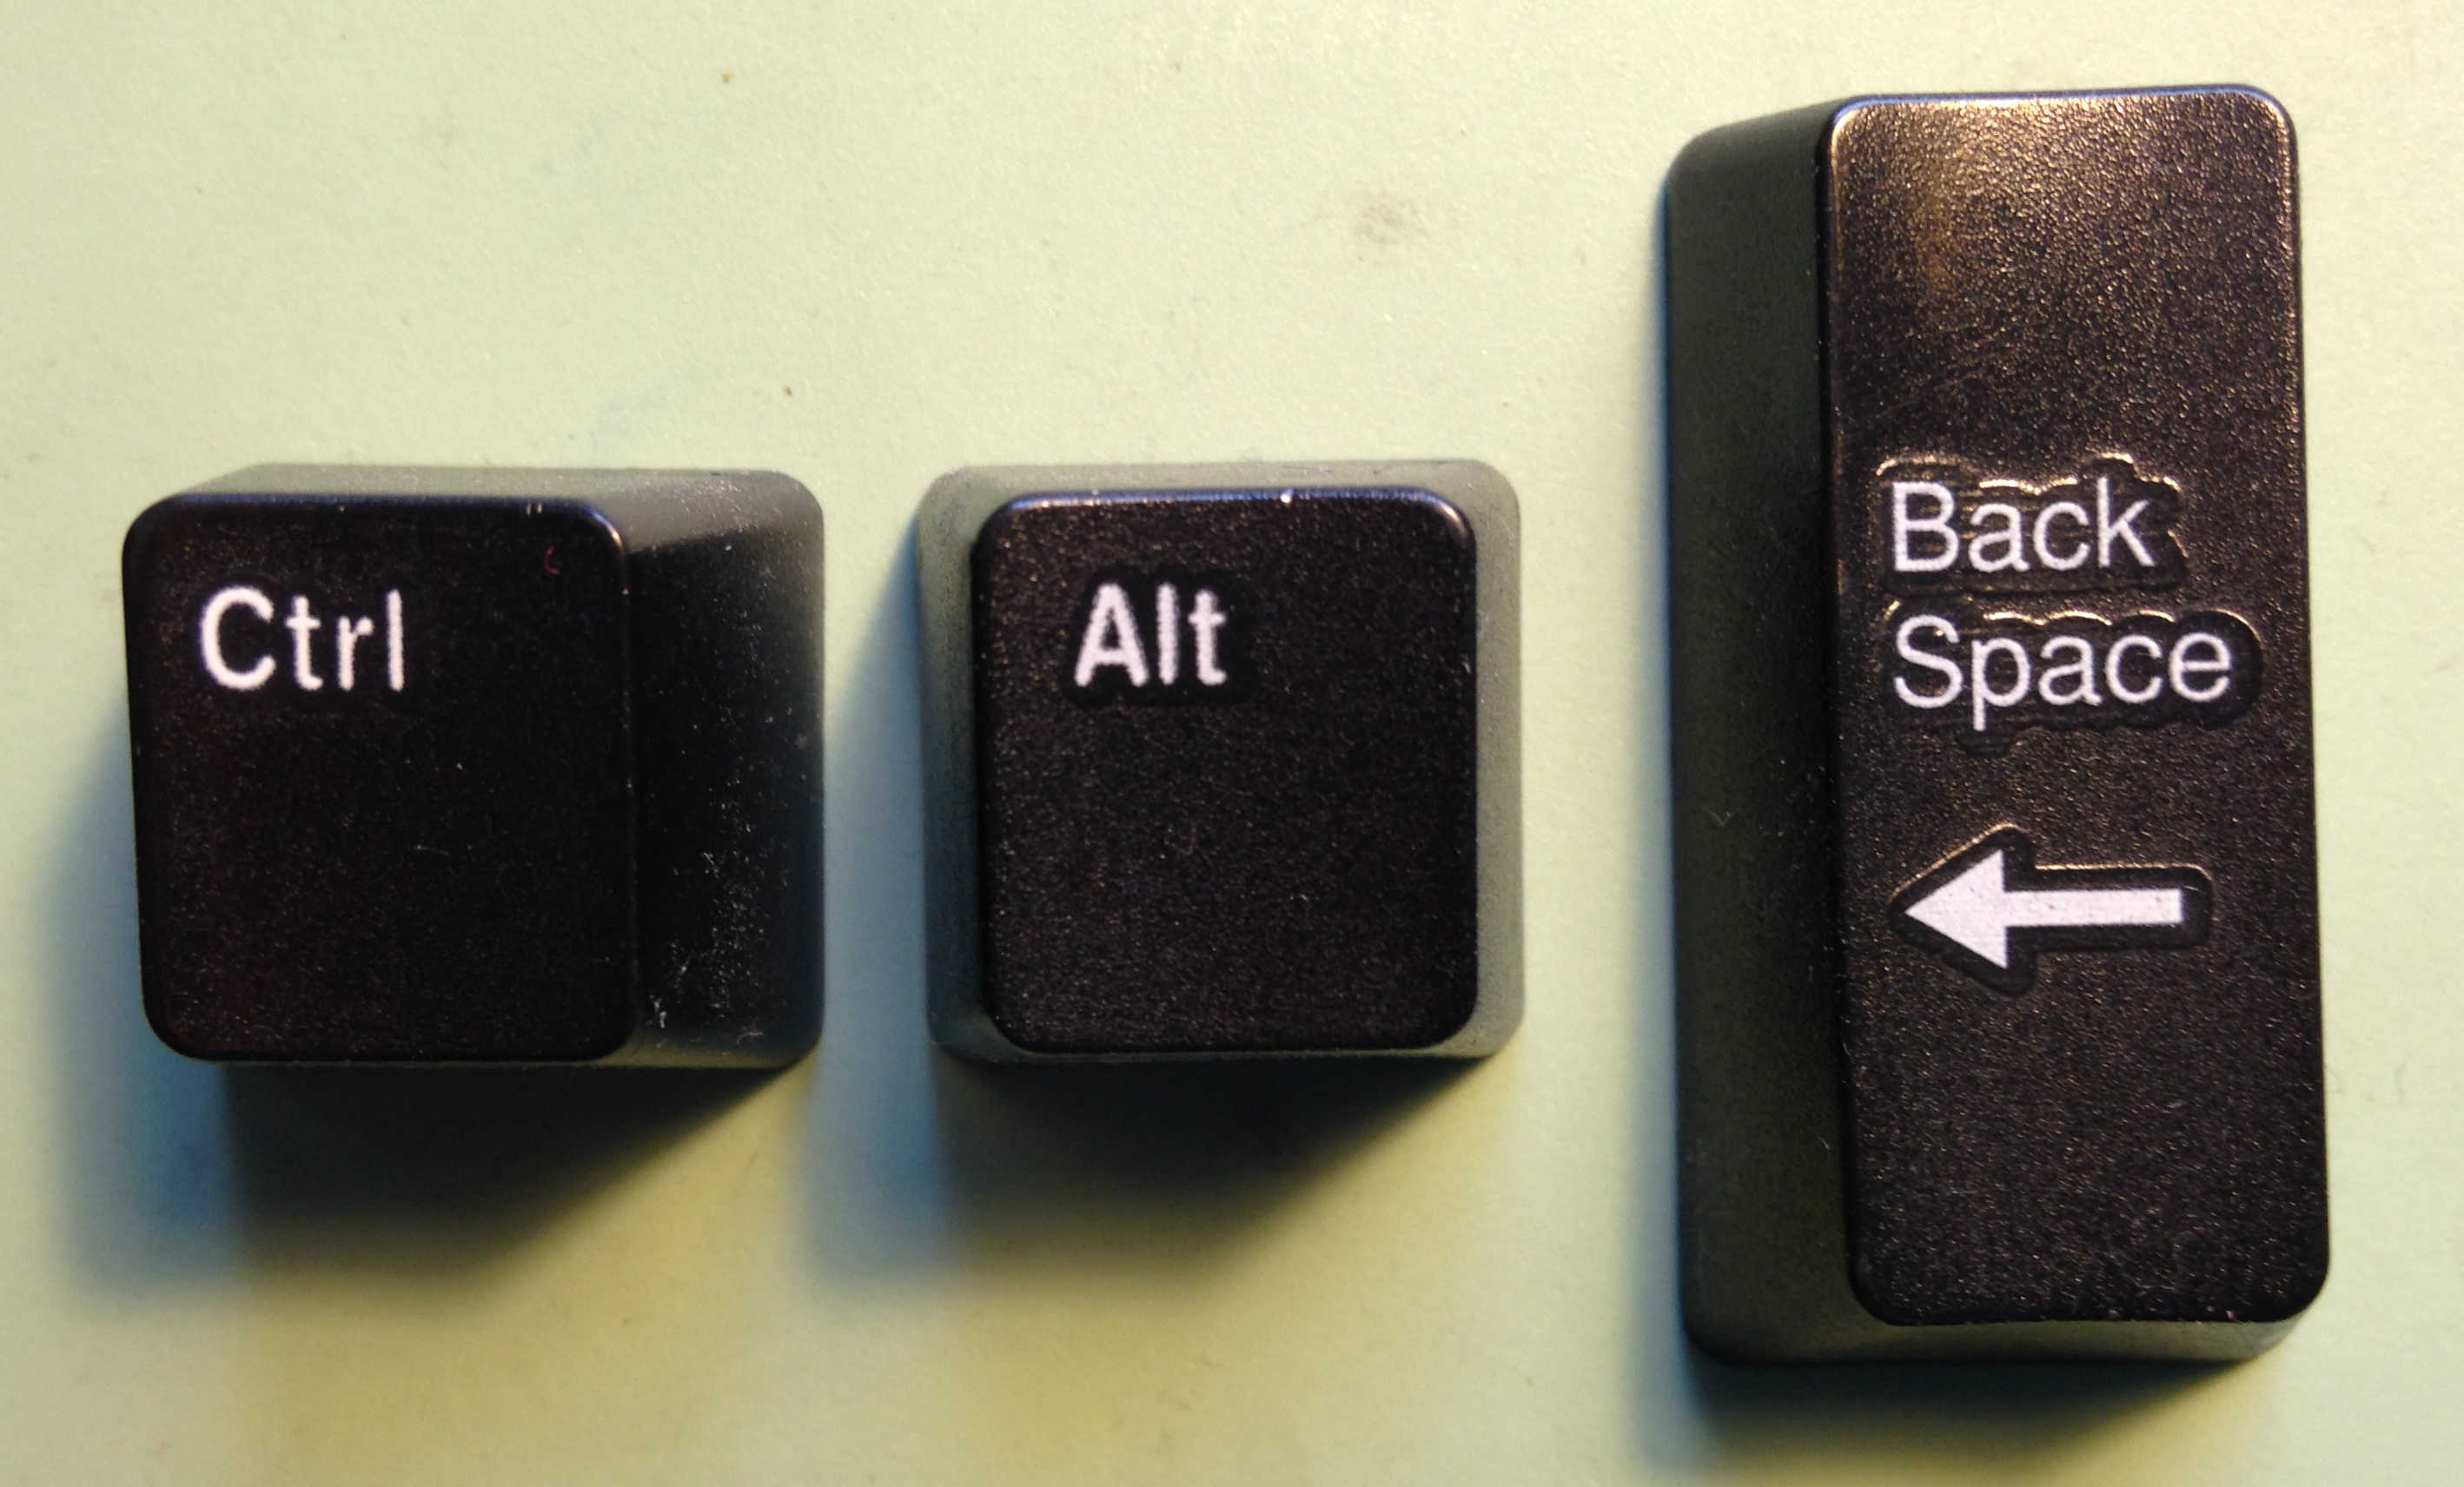 Keys arranged to show Ctrl-Alt-Backspace.